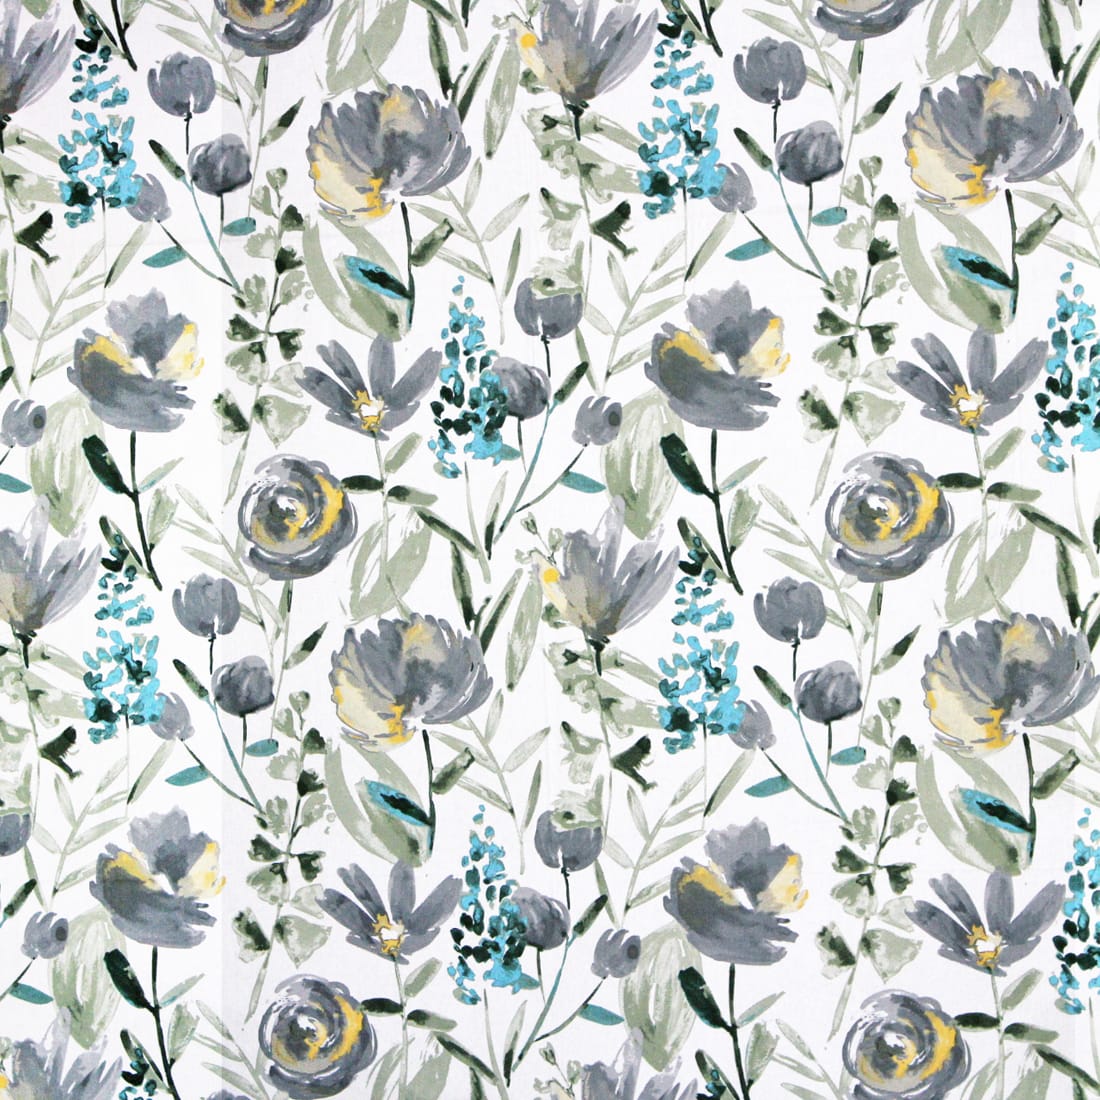 Printed 144 TC Prism Floral Cotton Fabric 88" (224 cms) - Aqua